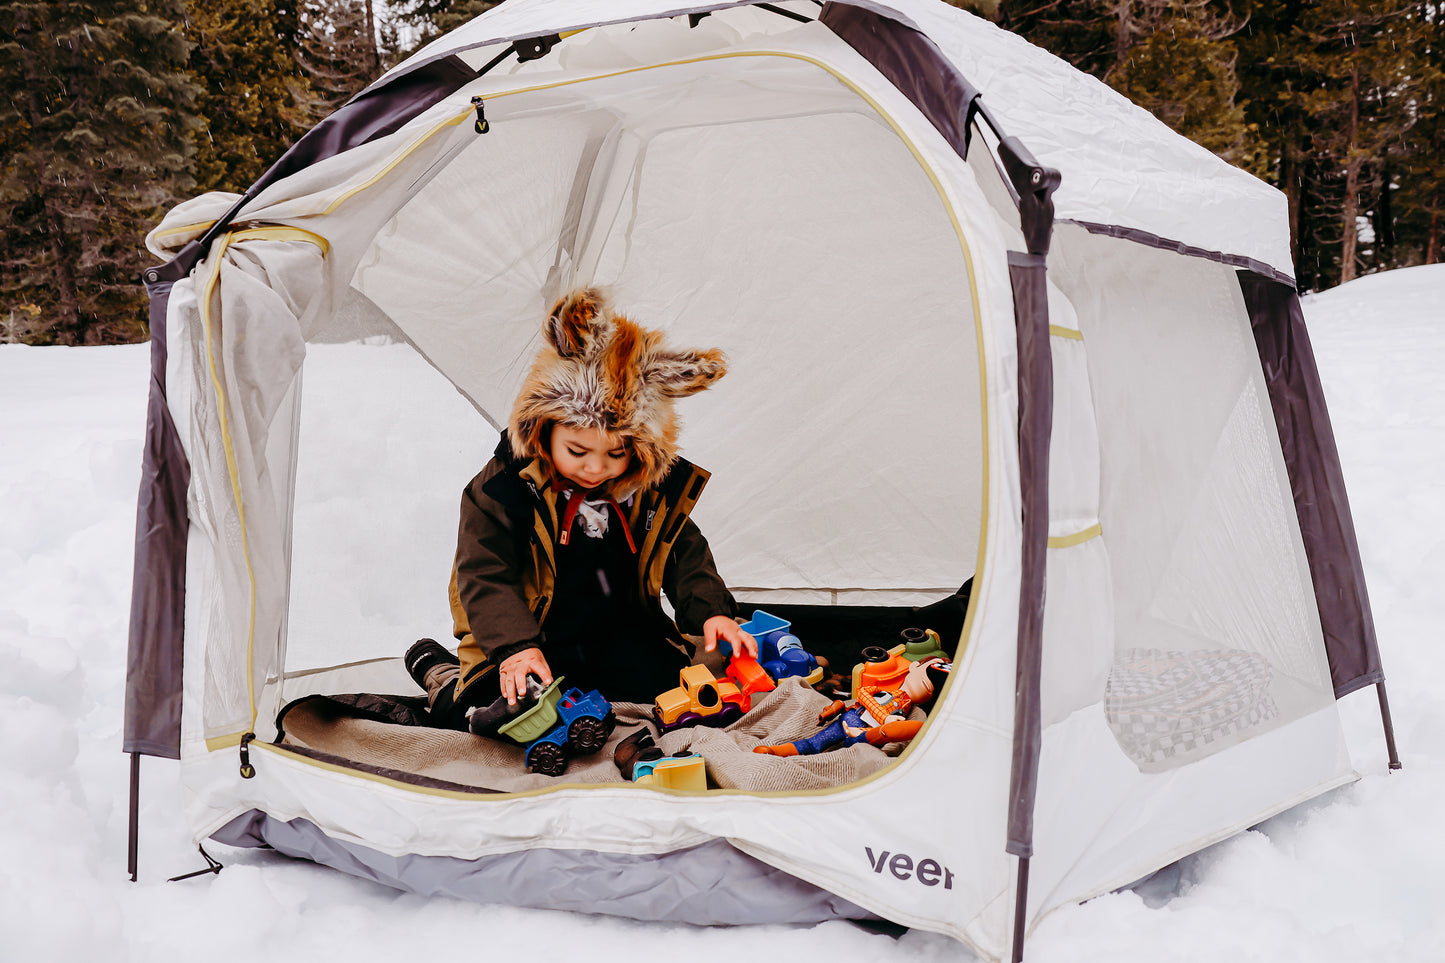 Veer Basecamp Tent with Child inside - White